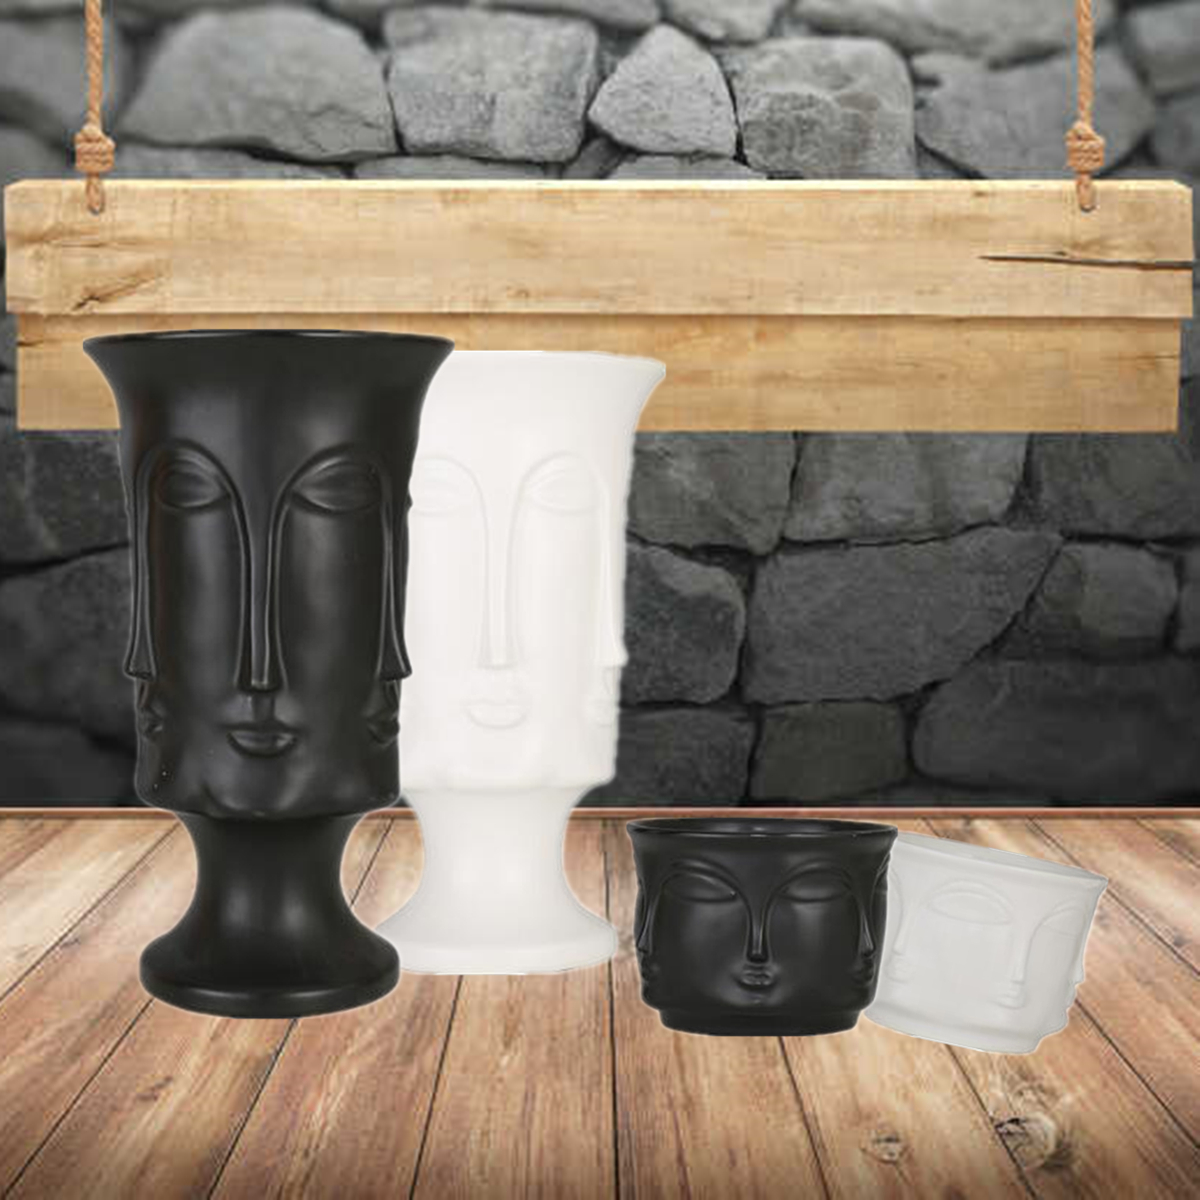 Minimalist-Artificial-Flower-Ceramic-Human-Face-Creative-Vase-Display-Room-Decorations-1473220-8